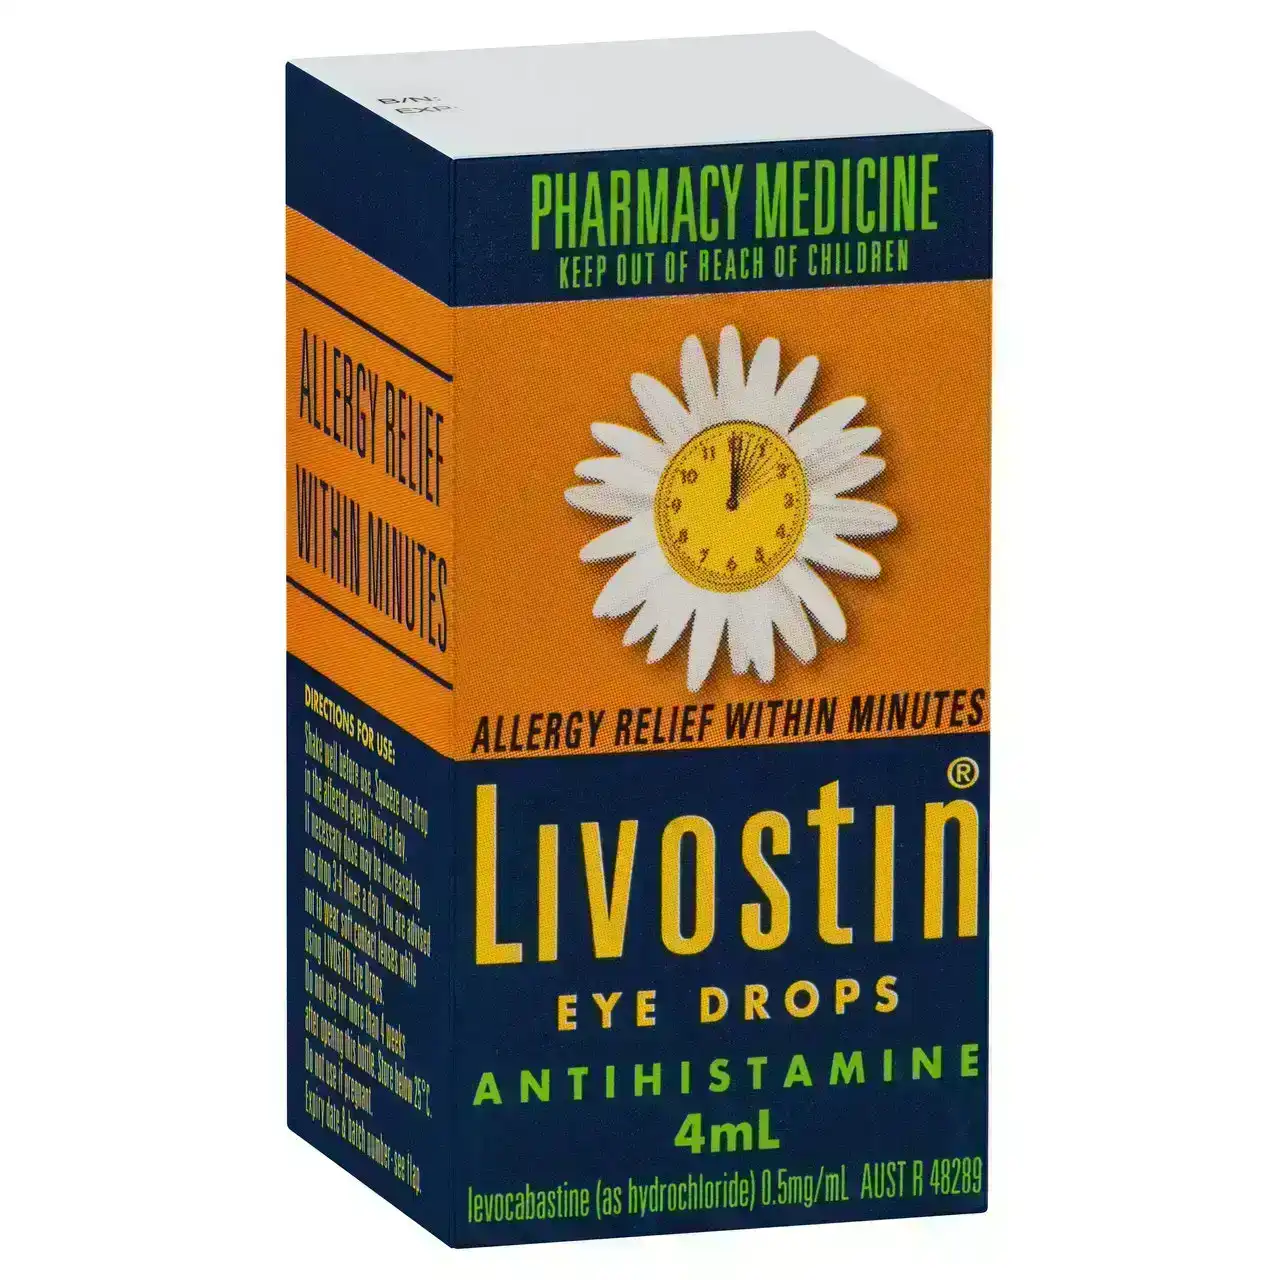 LIVOSTIN Antihistamine Allergy Eye Drops 4mL